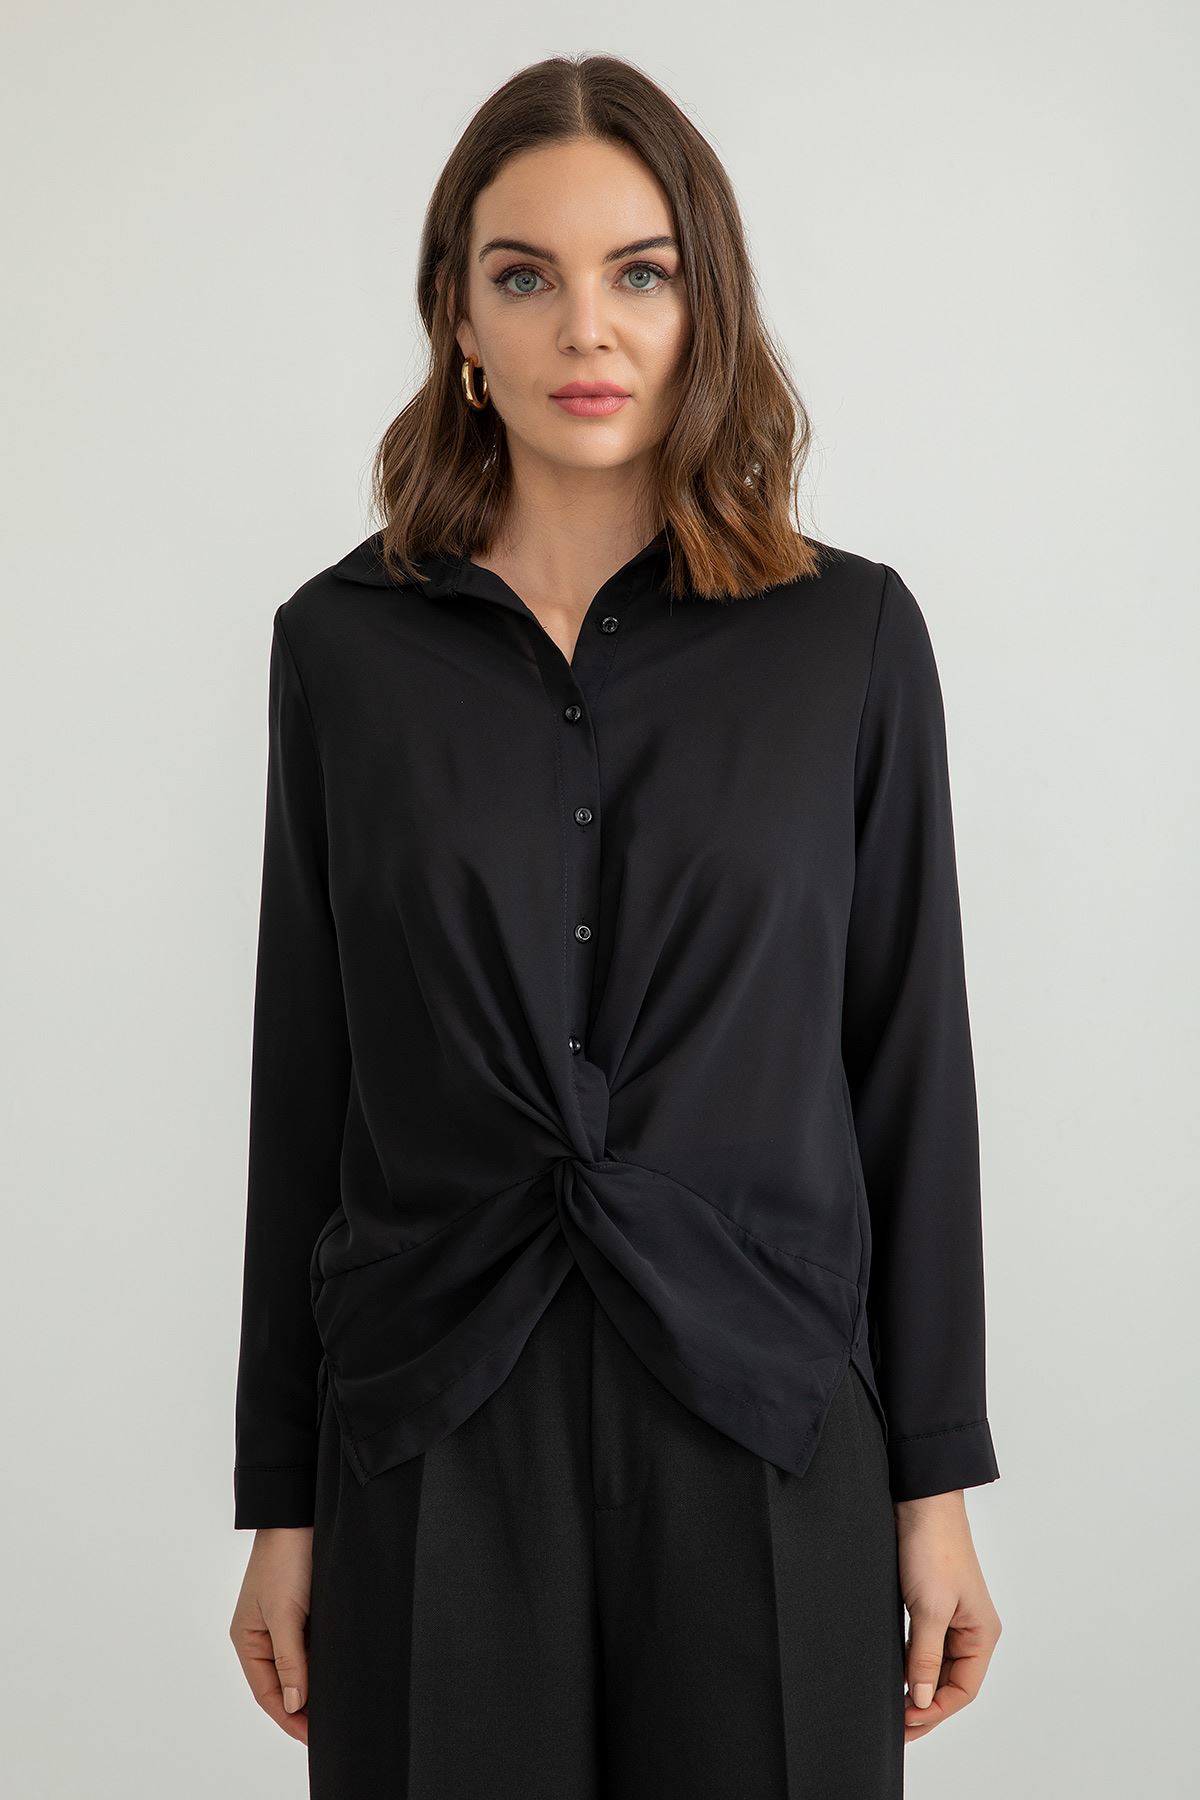 Jesica Fabric Long Sleeve Classical Button Front Women'S Shirt - Black